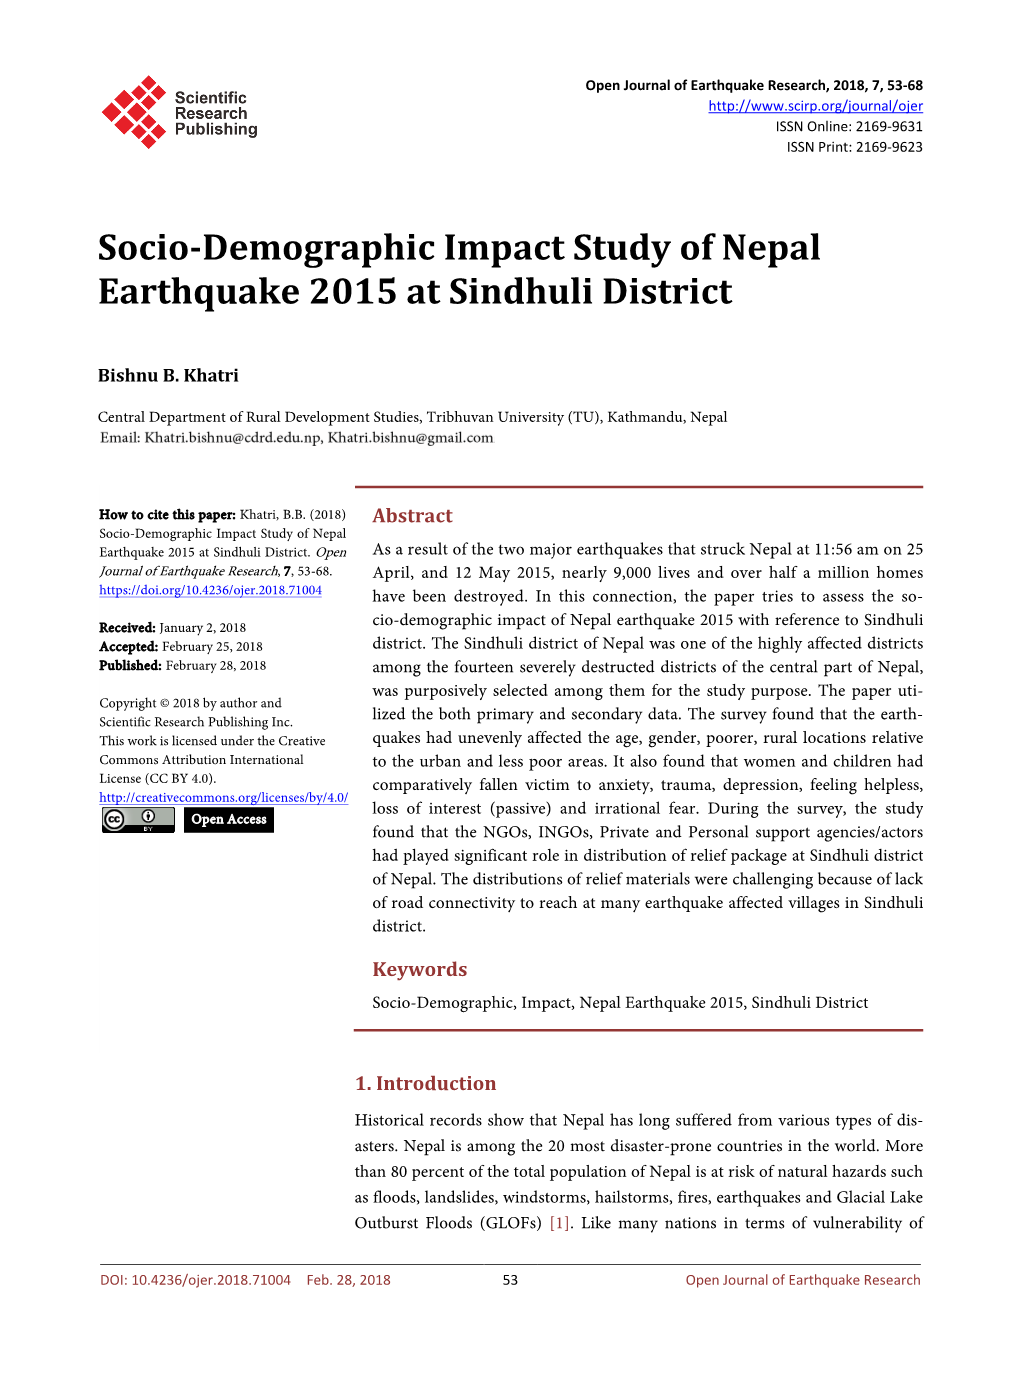 Socio-Demographic Impact Study of Nepal Earthquake 2015 at Sindhuli District